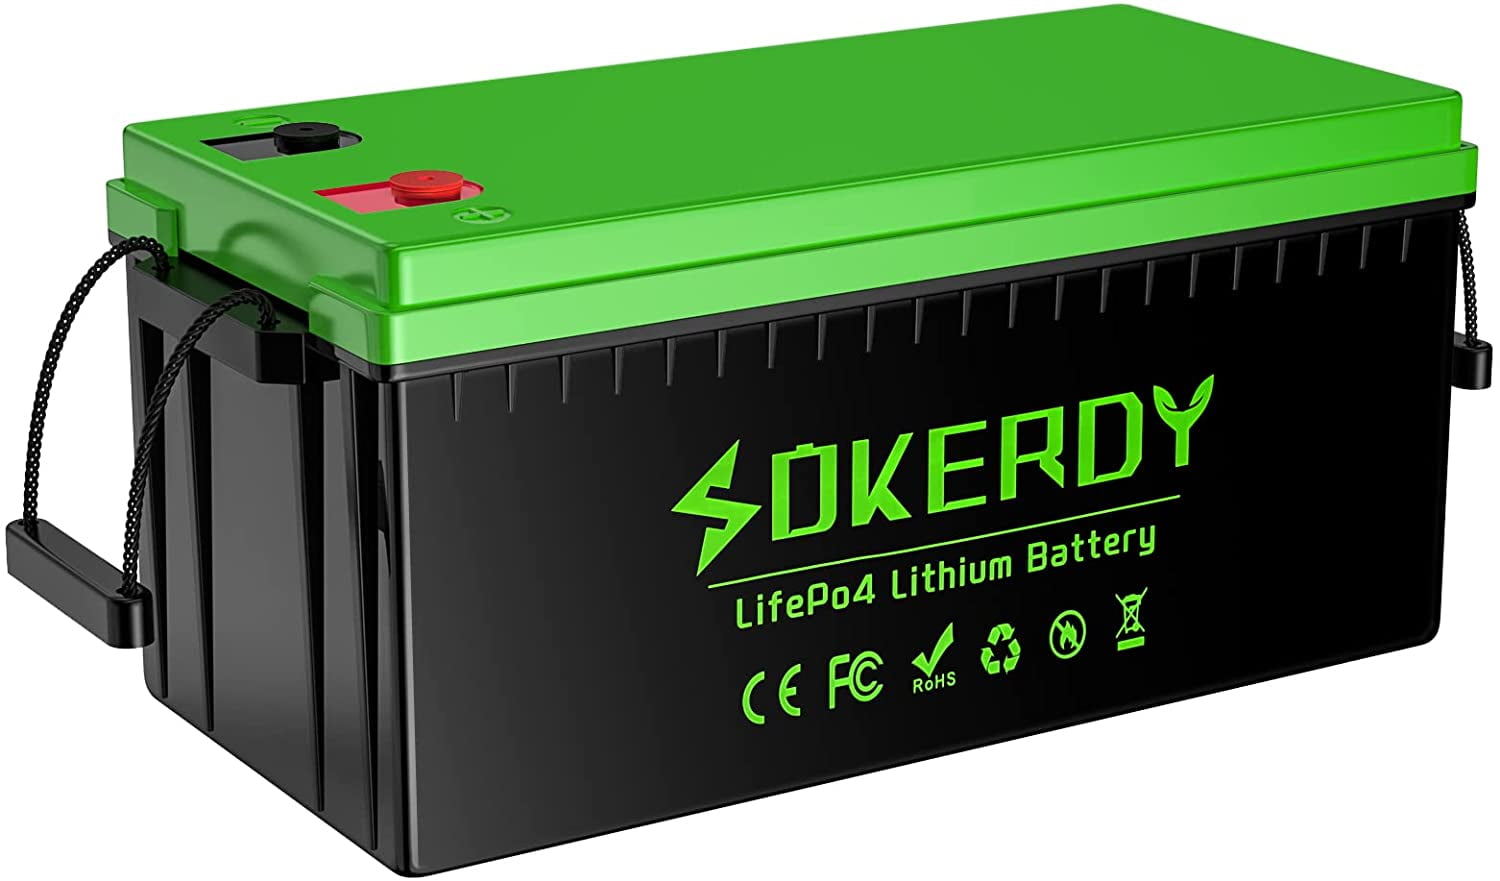 12.8V 400Ah LiFePO4 Deep Cycle Battery, MAX Energy 5120WH,400A BMS